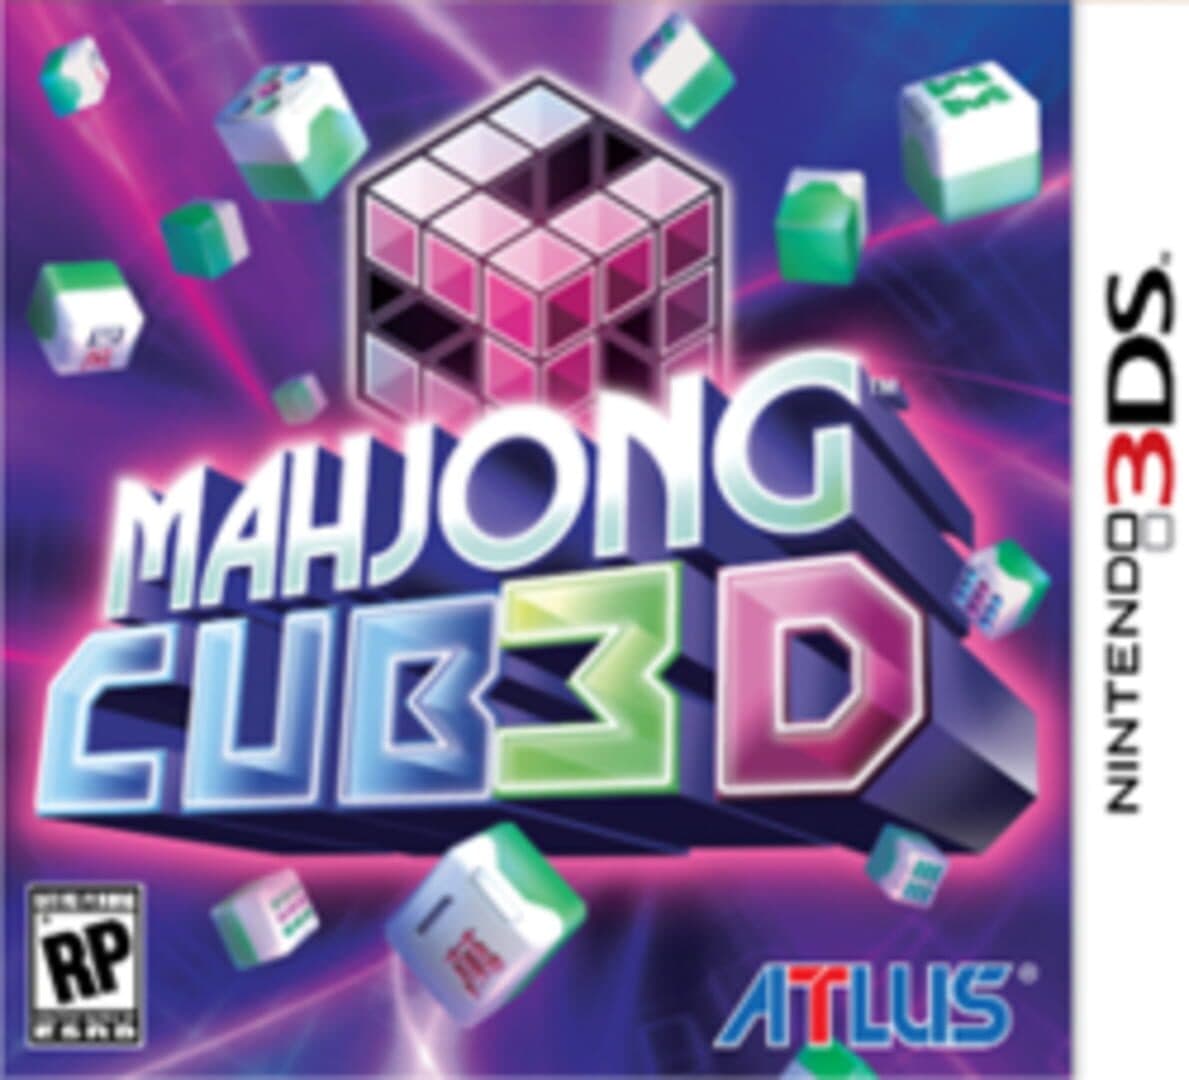 Mahjong Cub3d cover art